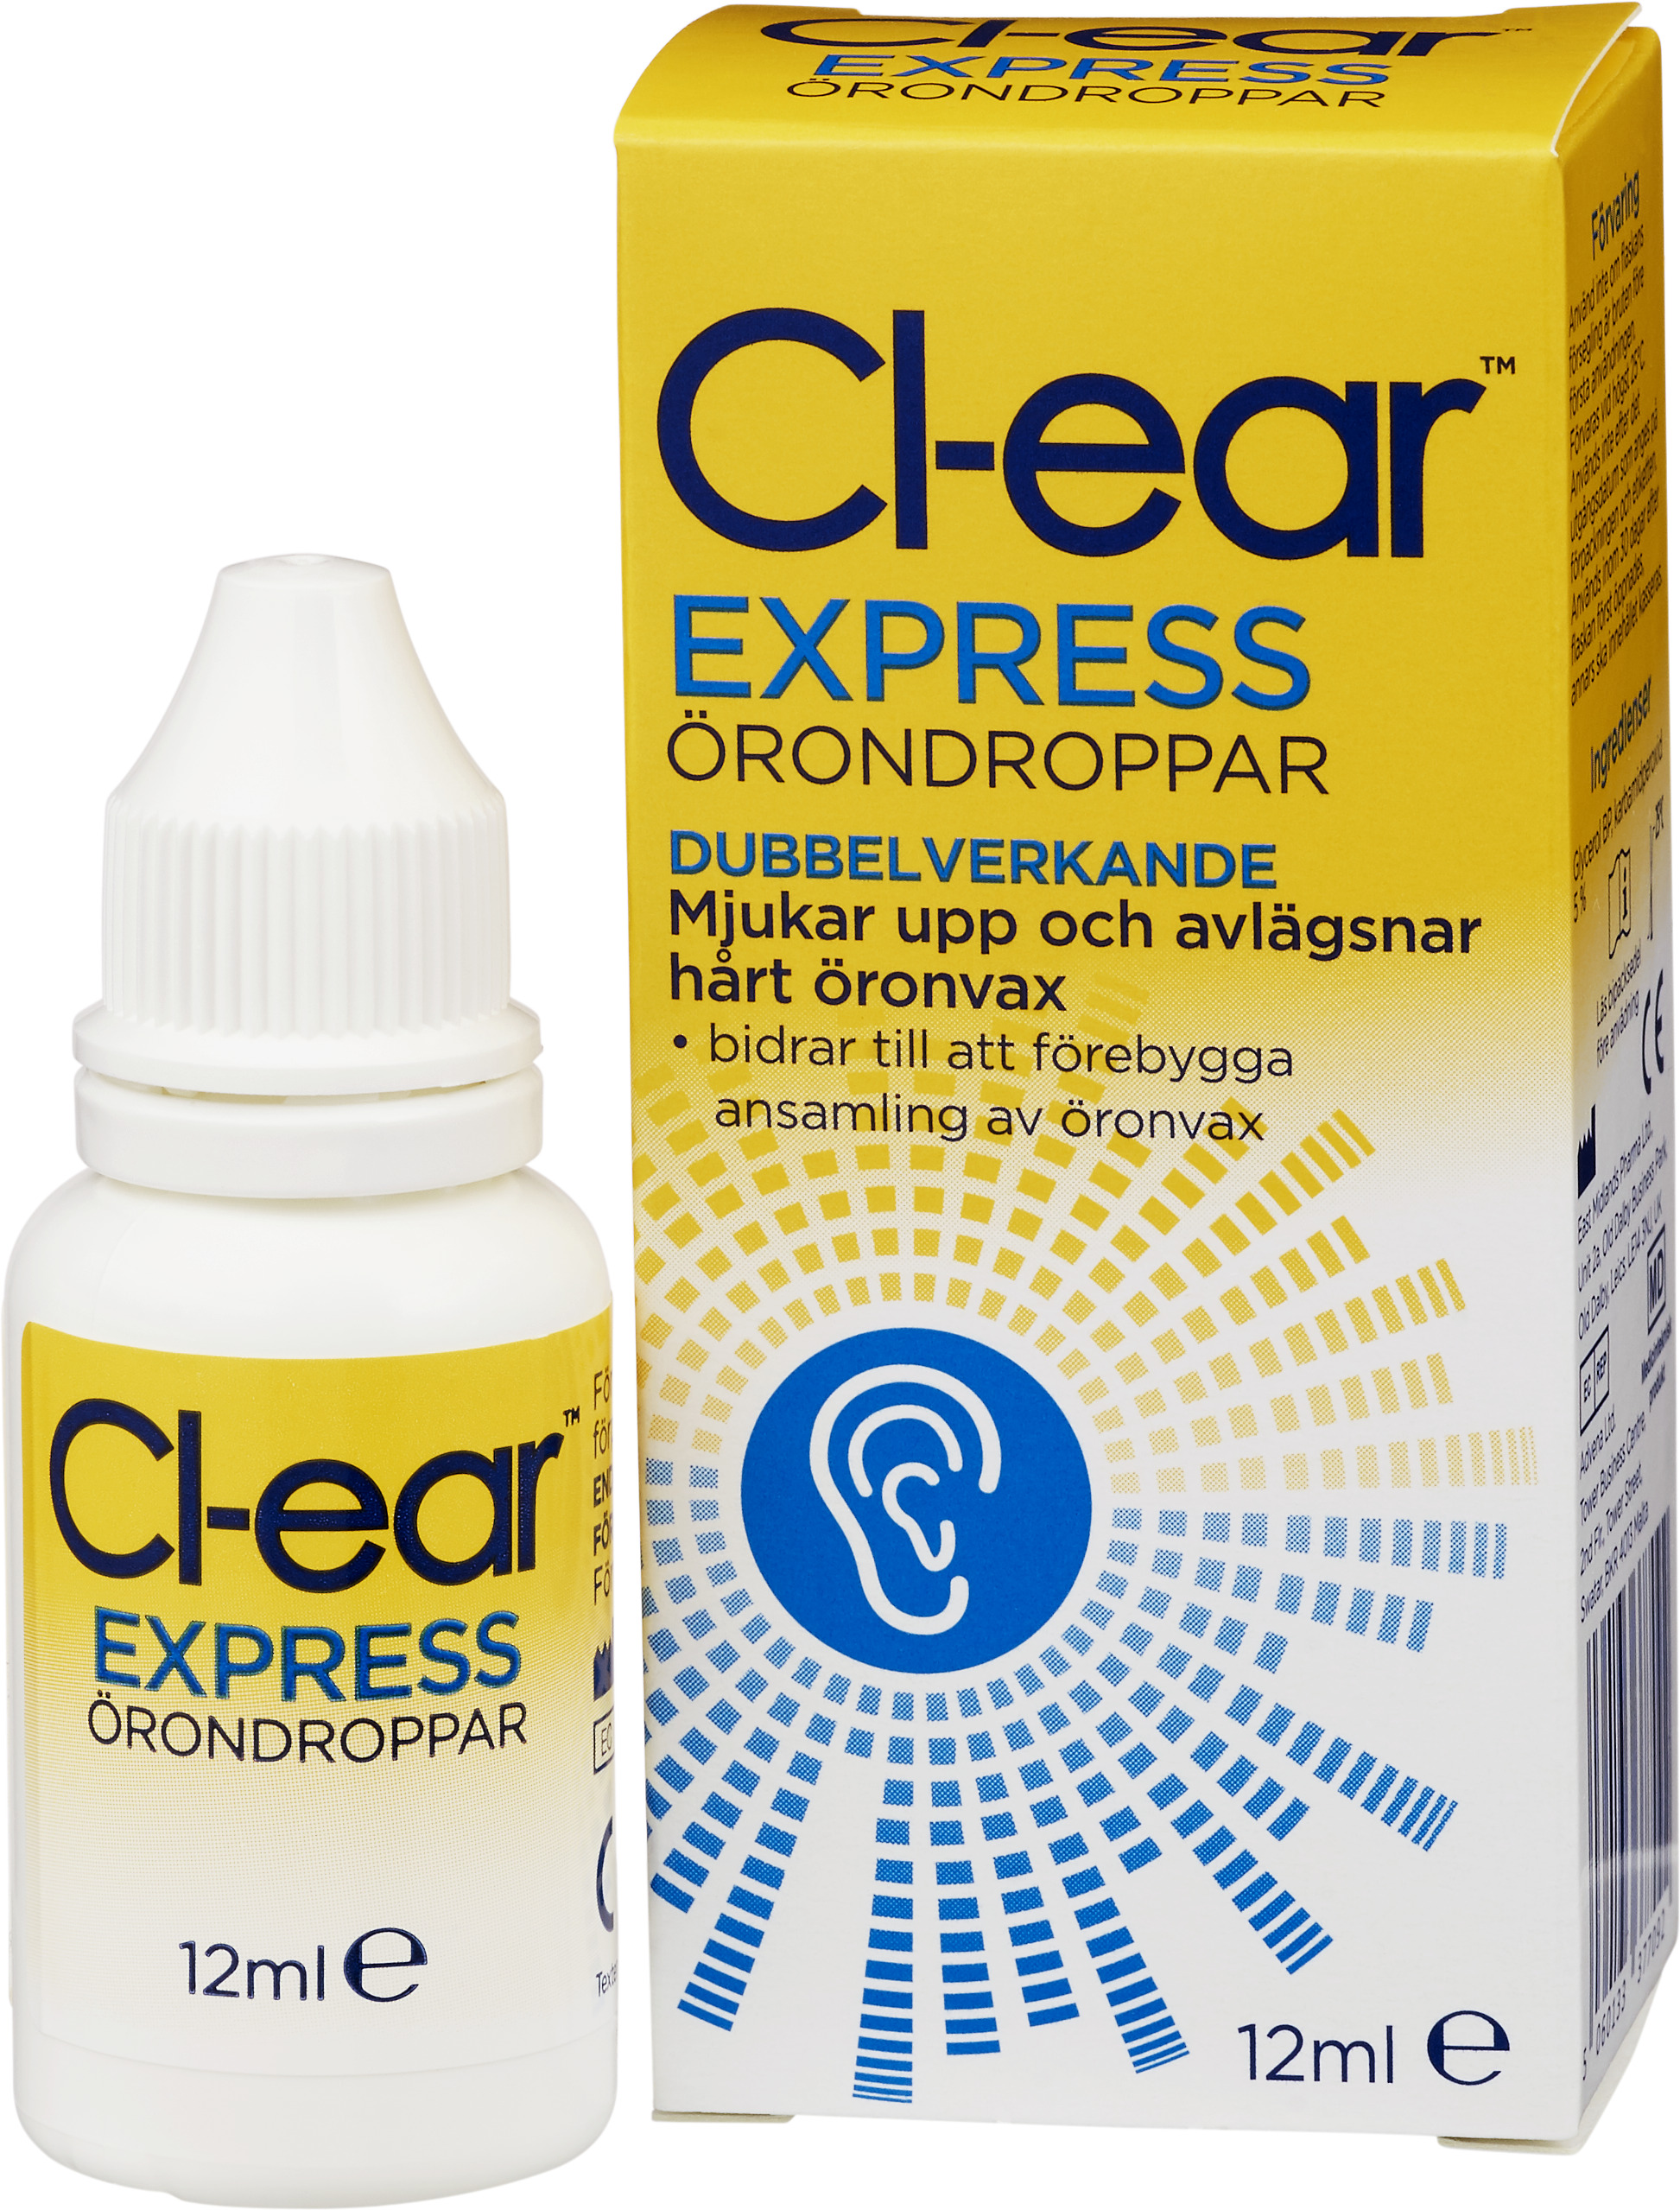 Cl-ear Express Örondroppar 12 ml